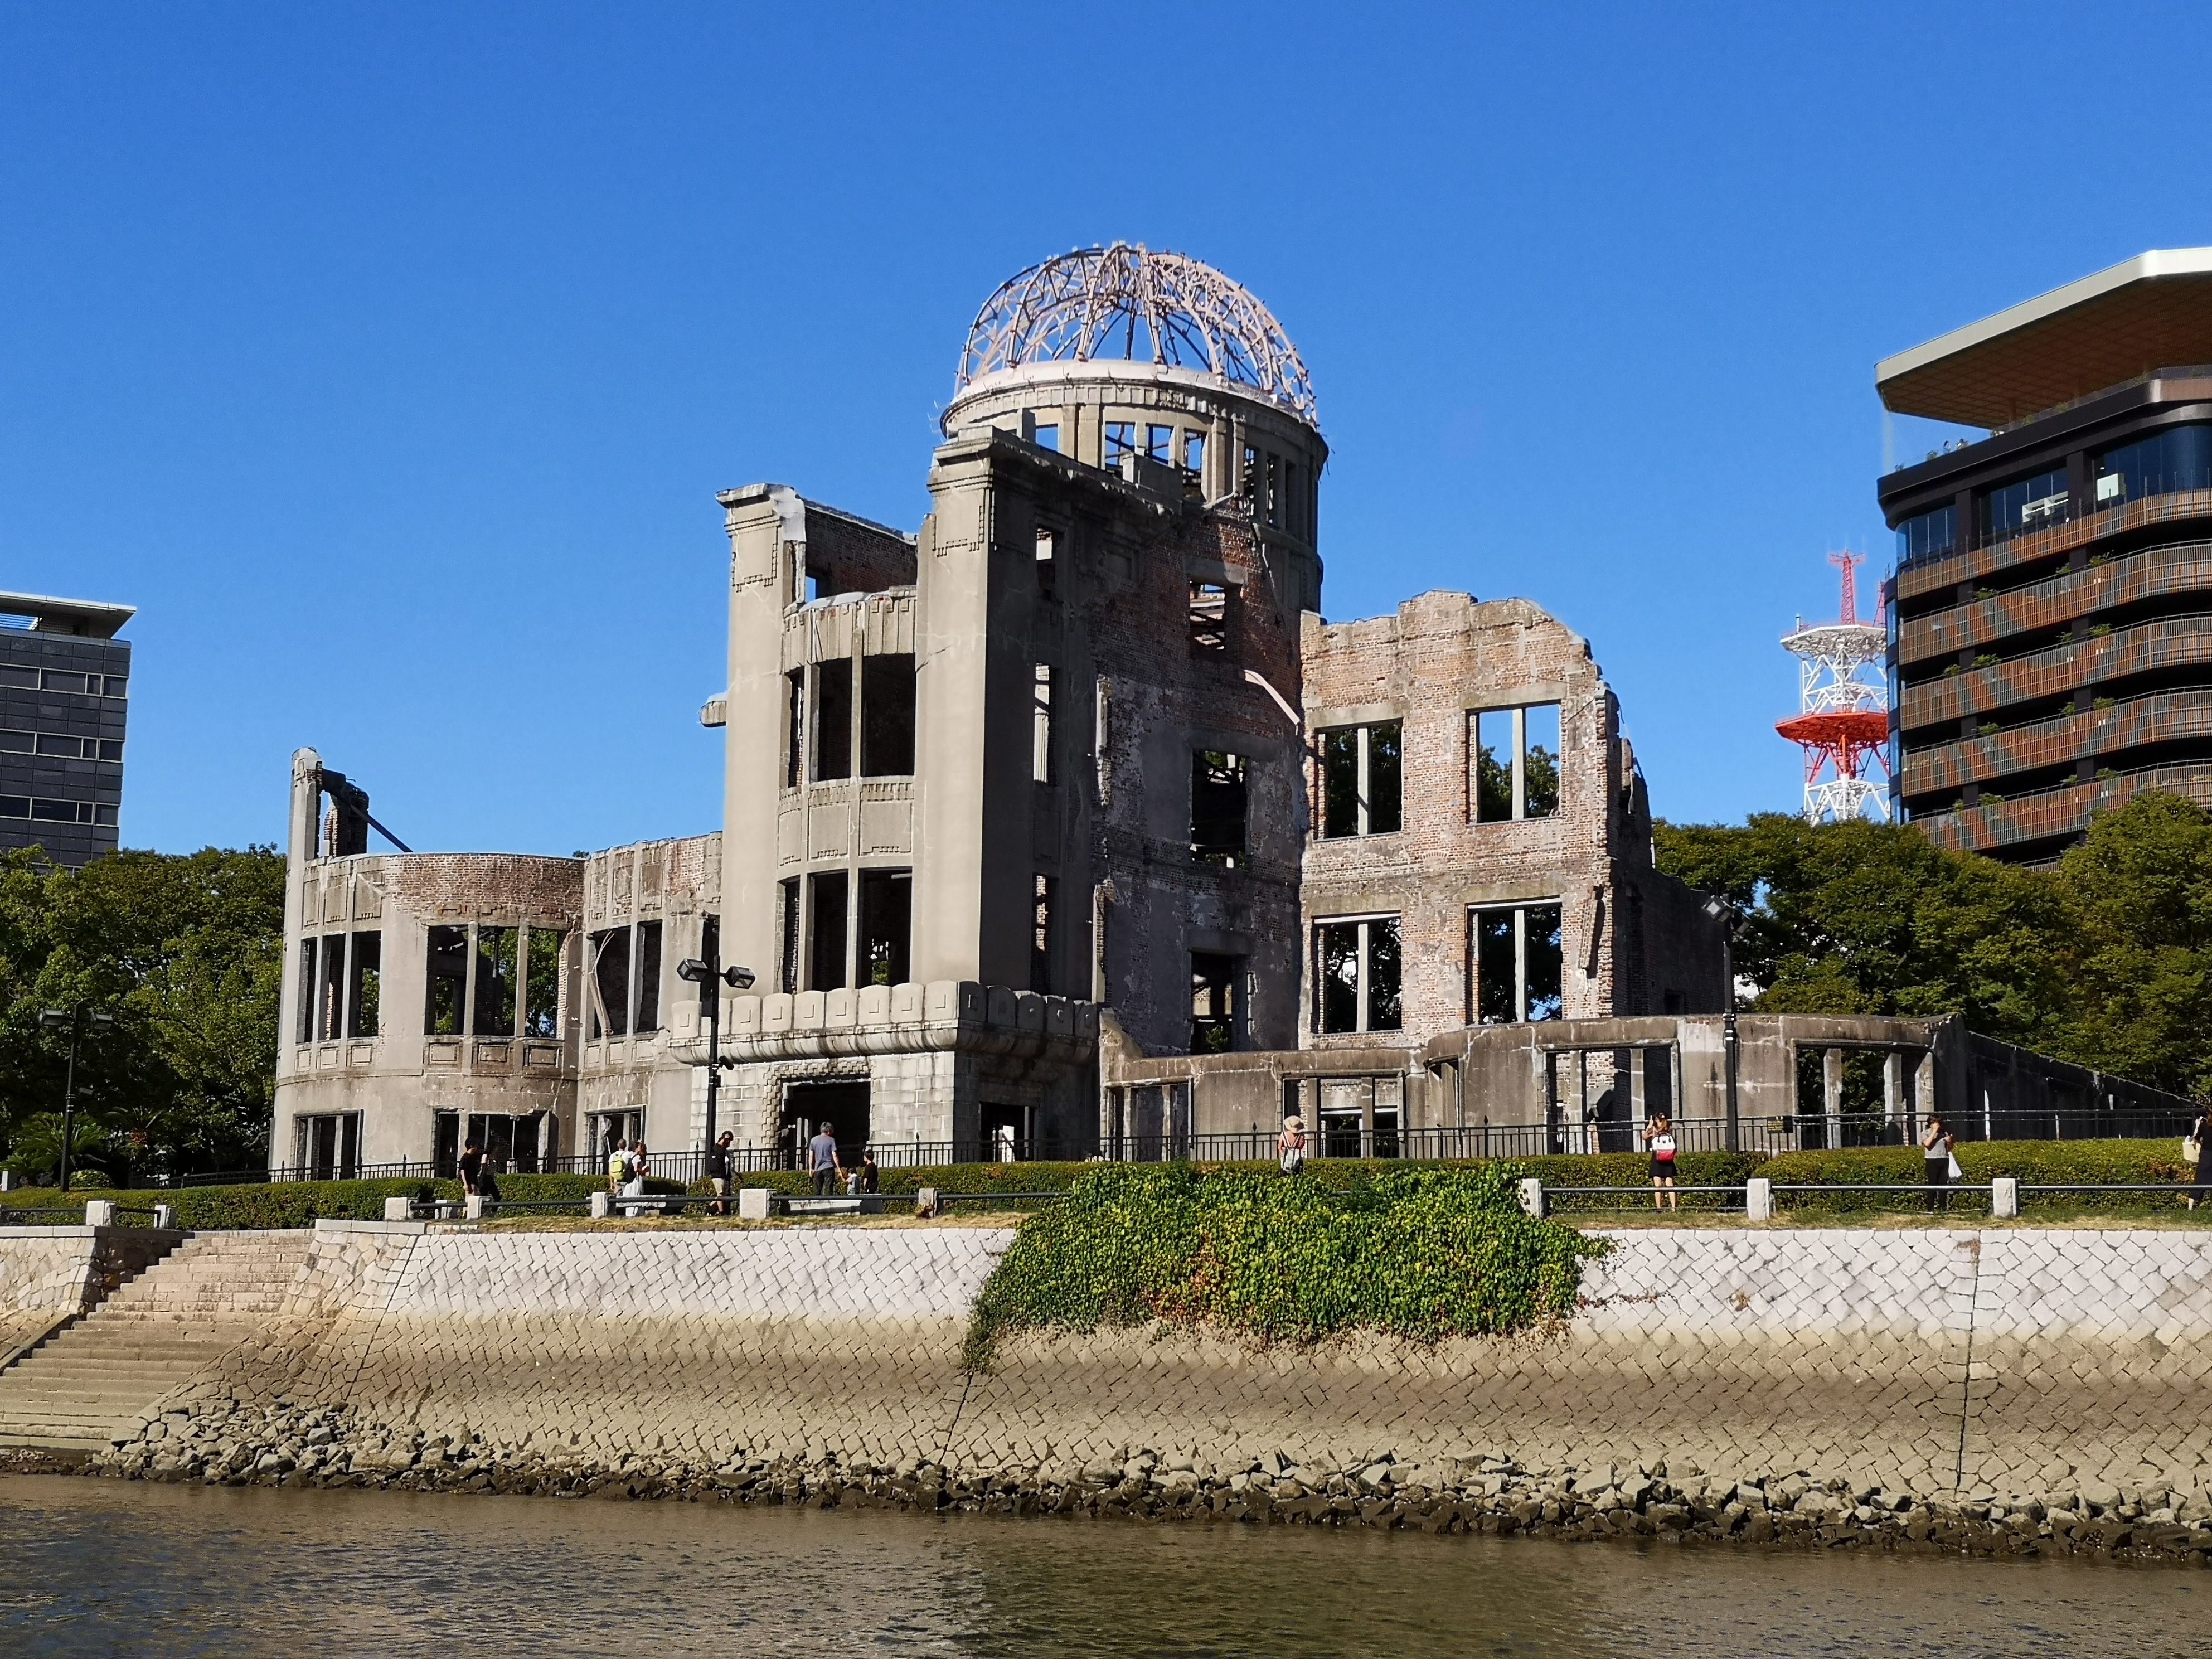 A-bomb Dome, Hiroshima